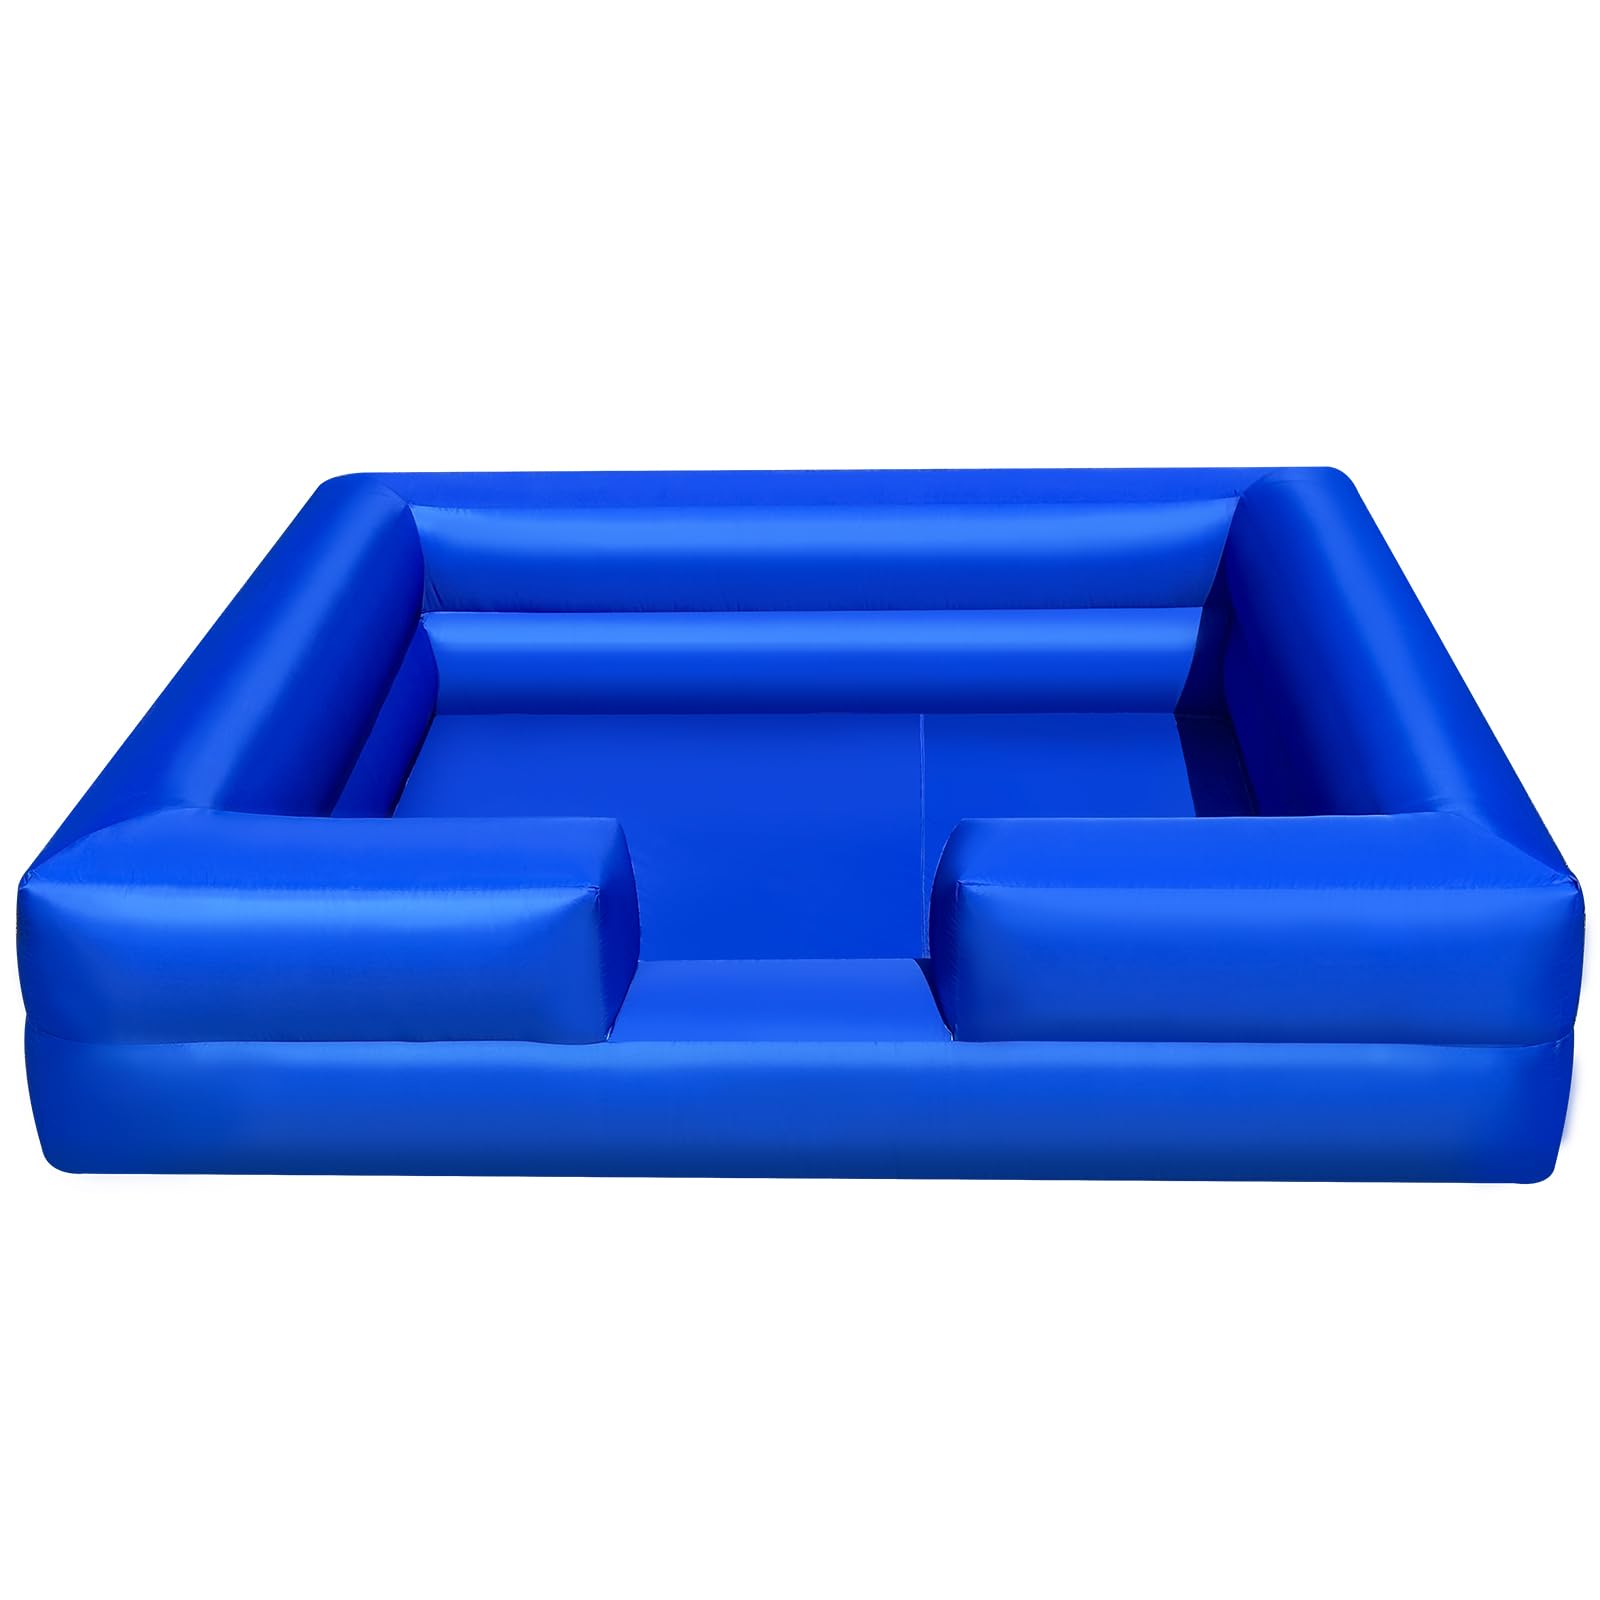 WARSUN 10'x10' Inflatable Foam Pit for Foam Parties - Blue/Orange Foam Pool for Fun Events